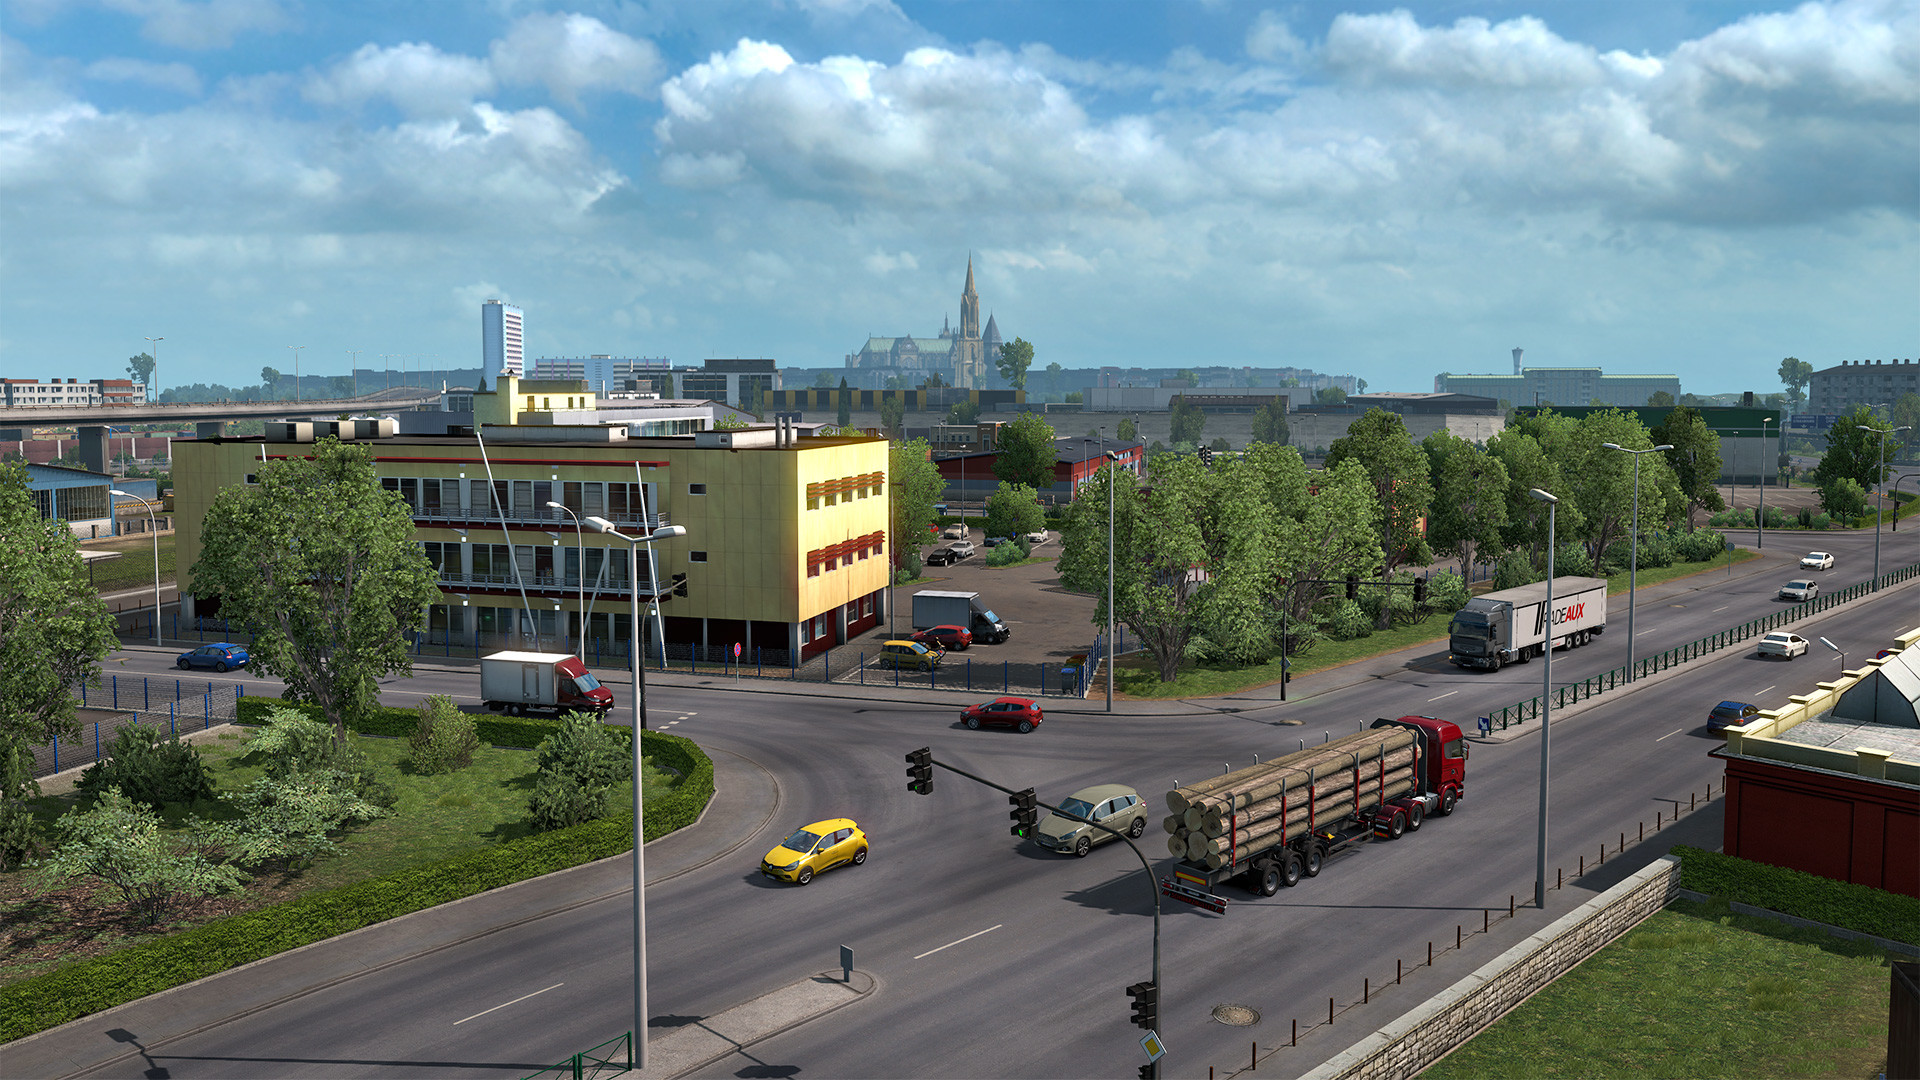 Скриншот Euro Truck Simulator 2 с гарантией ✅ | offline